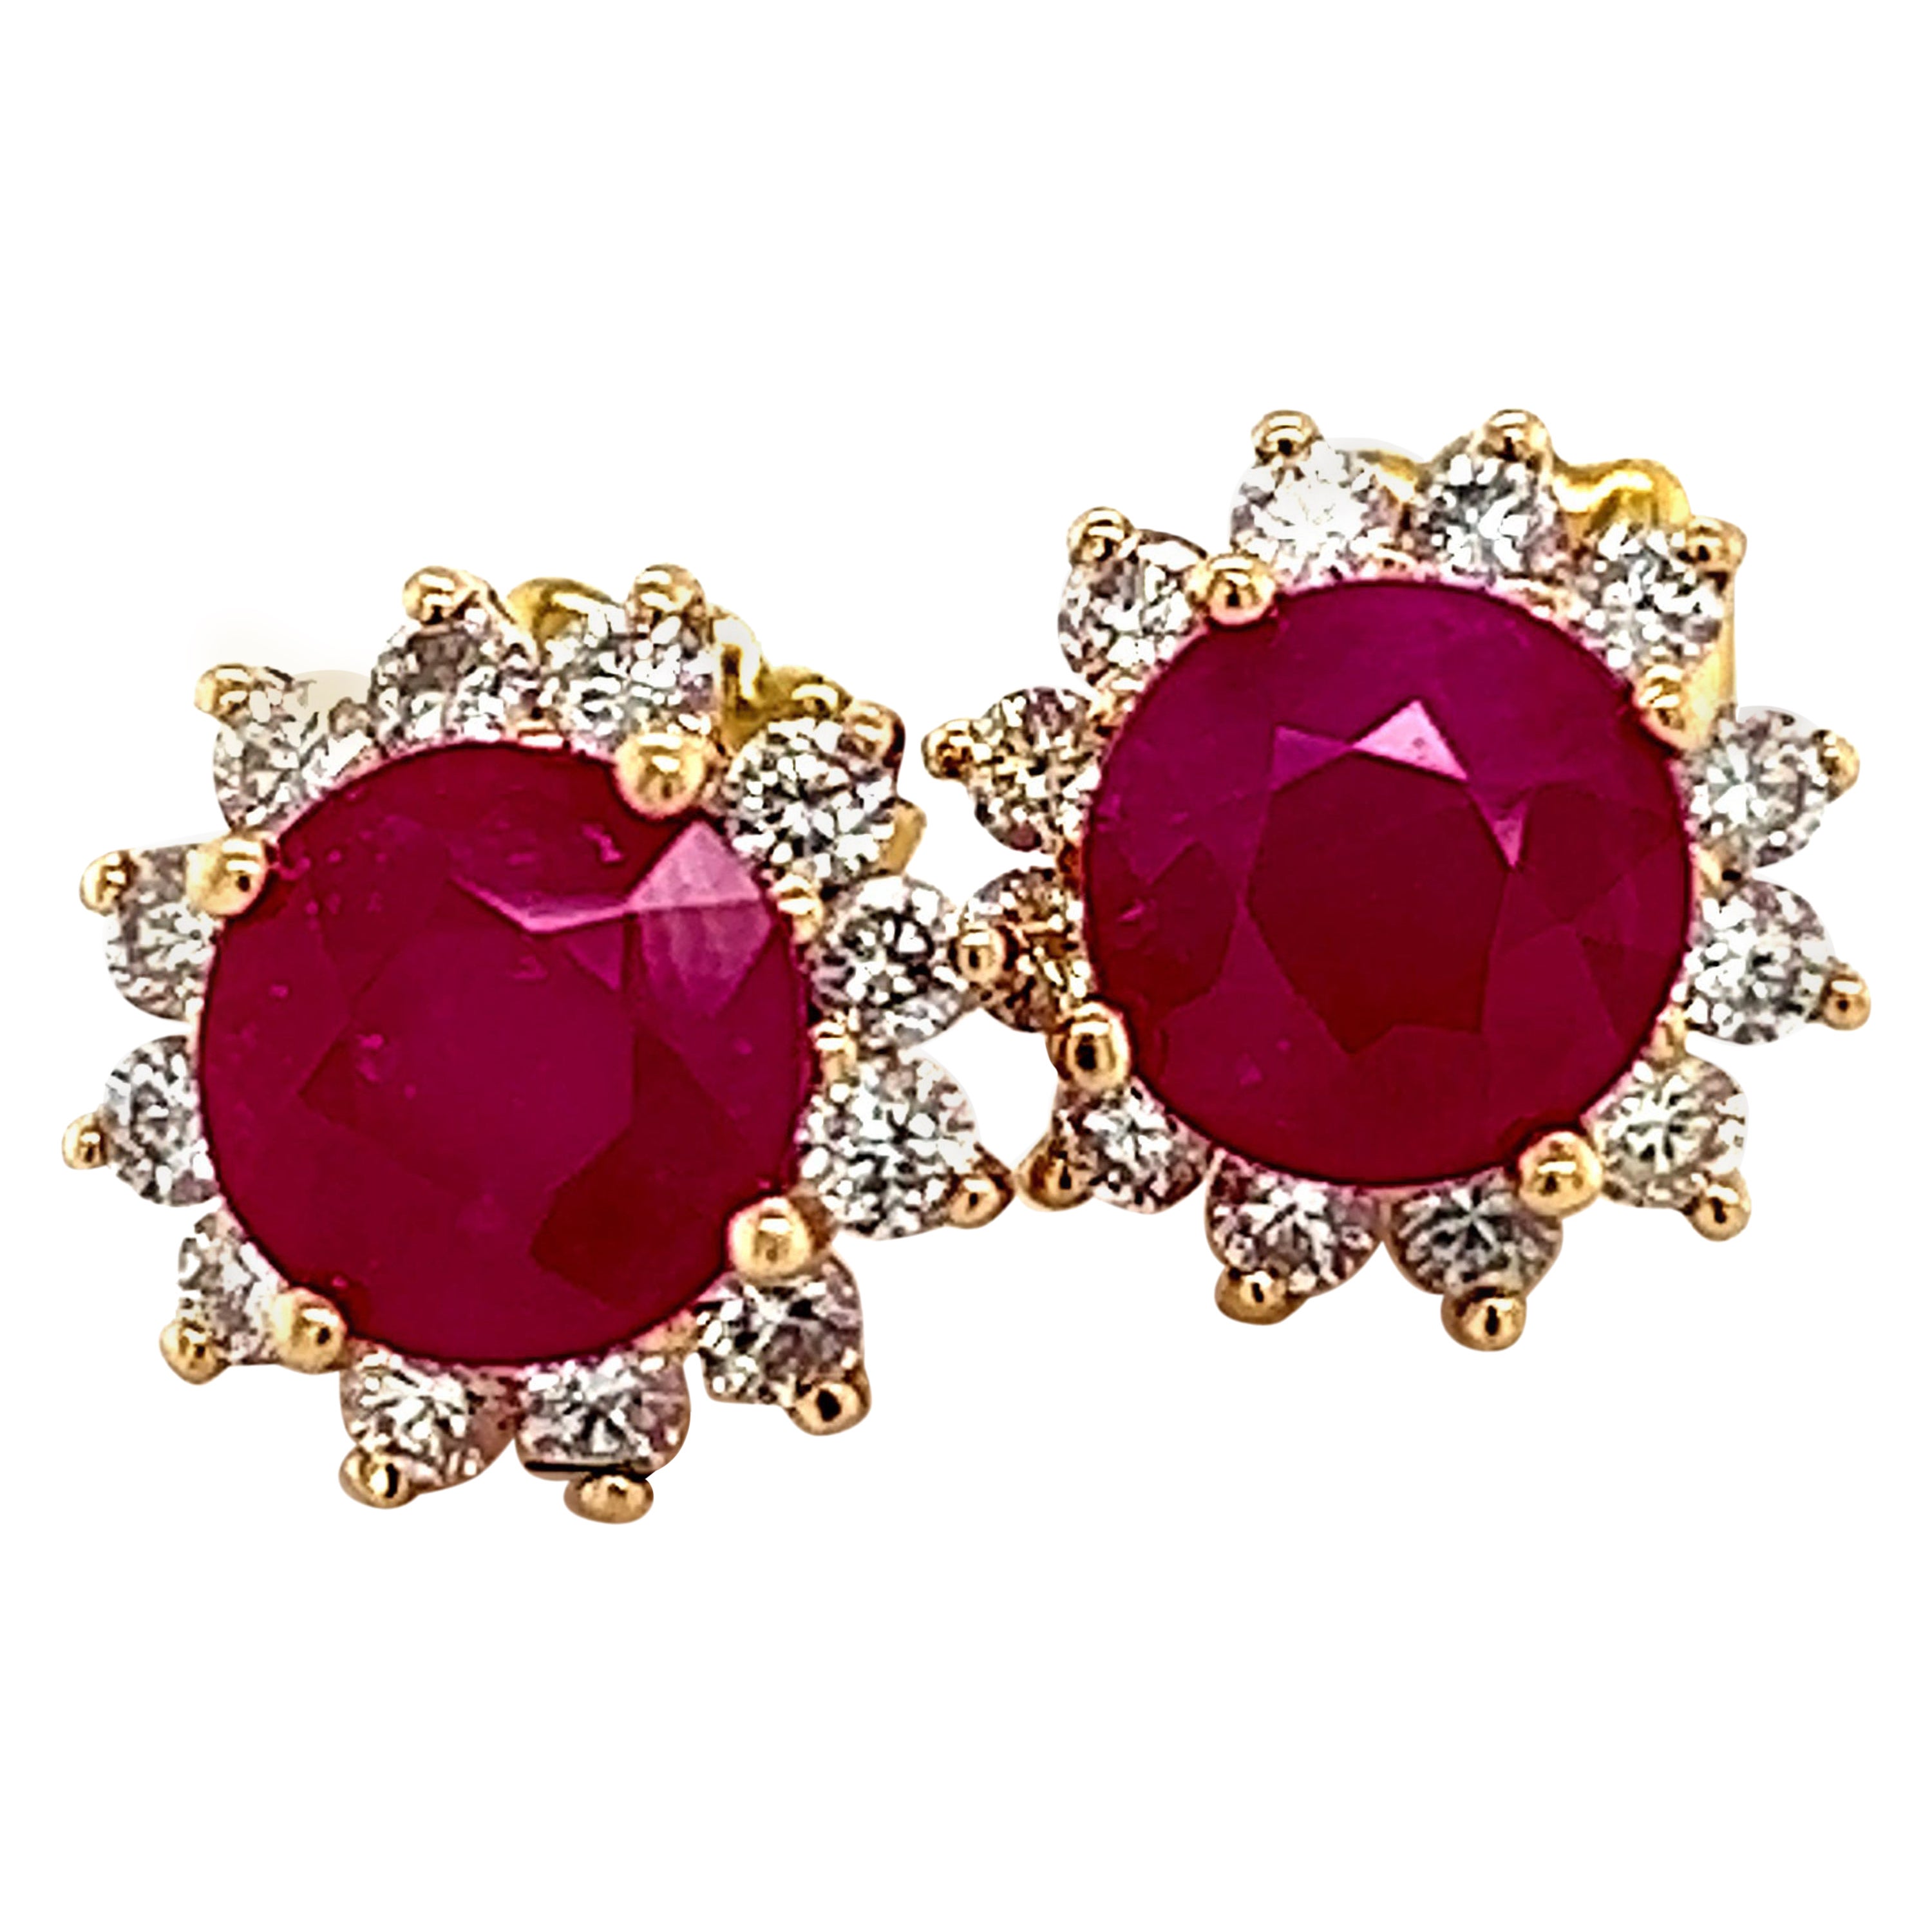 Natural Ruby Diamond Earrings 14k Gold 3.72 TCW Certified